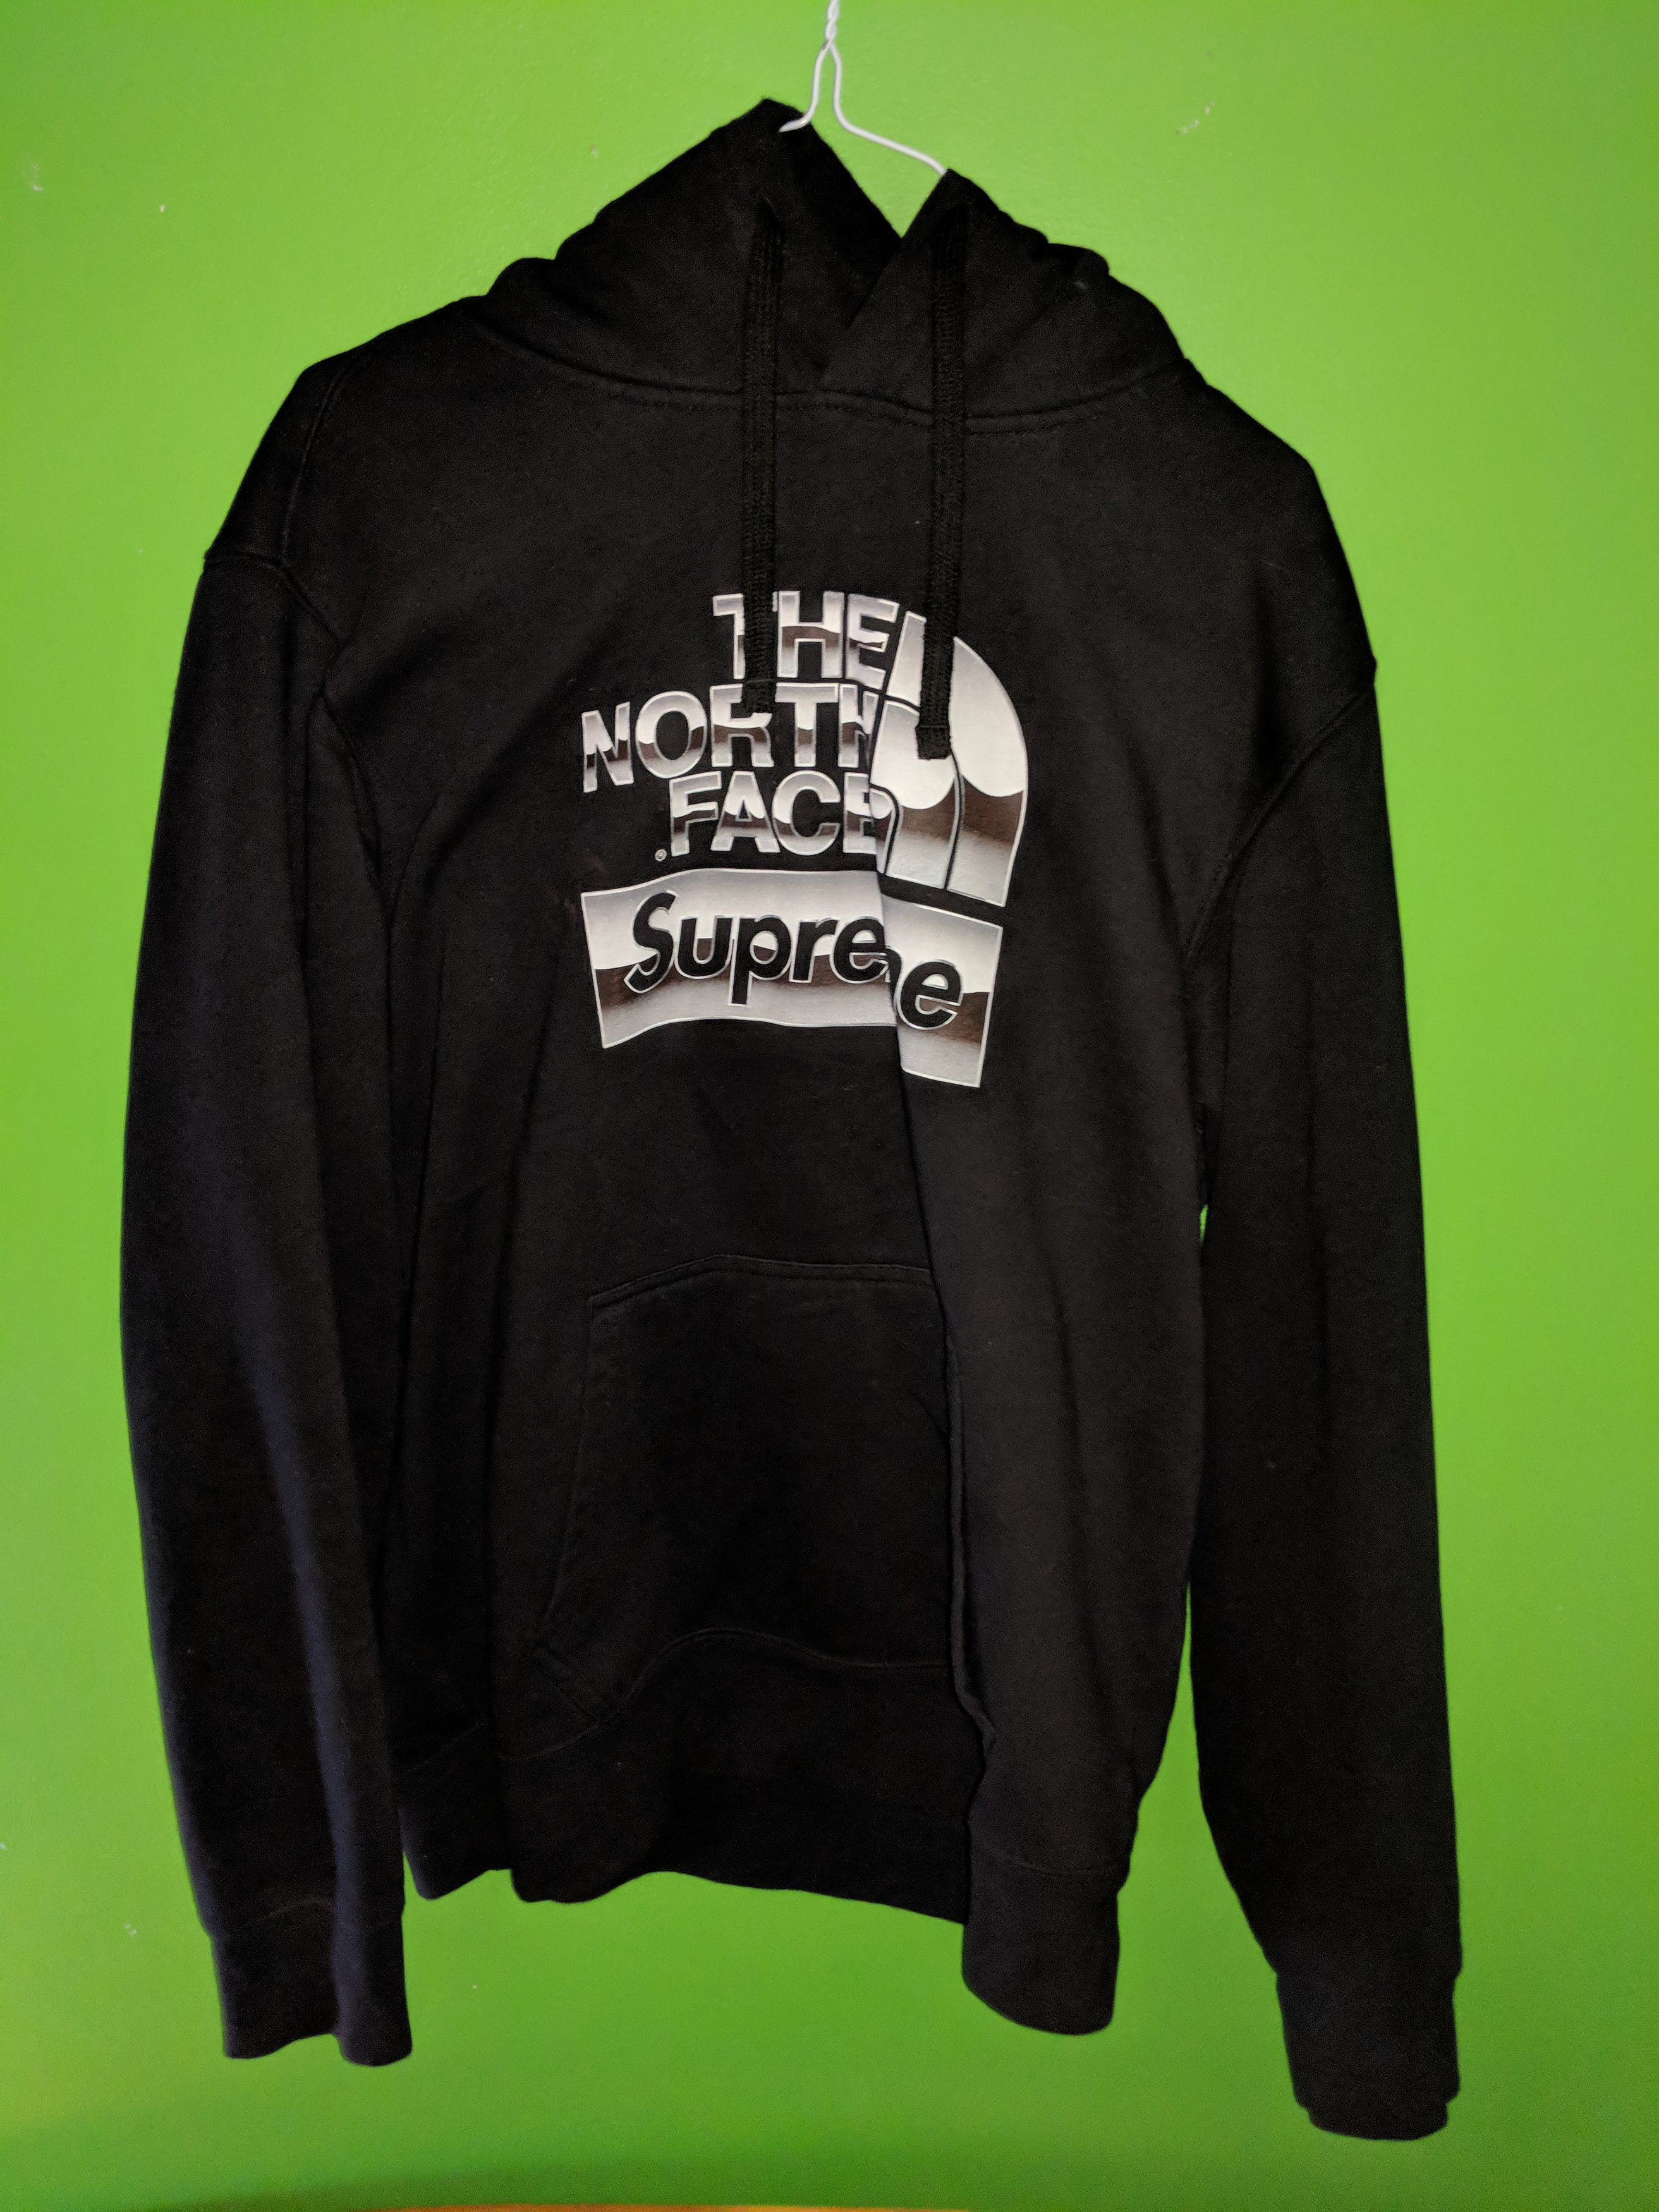 Supreme x The North Face - Metallic Box Logo Hoodie (Black) – eluXive